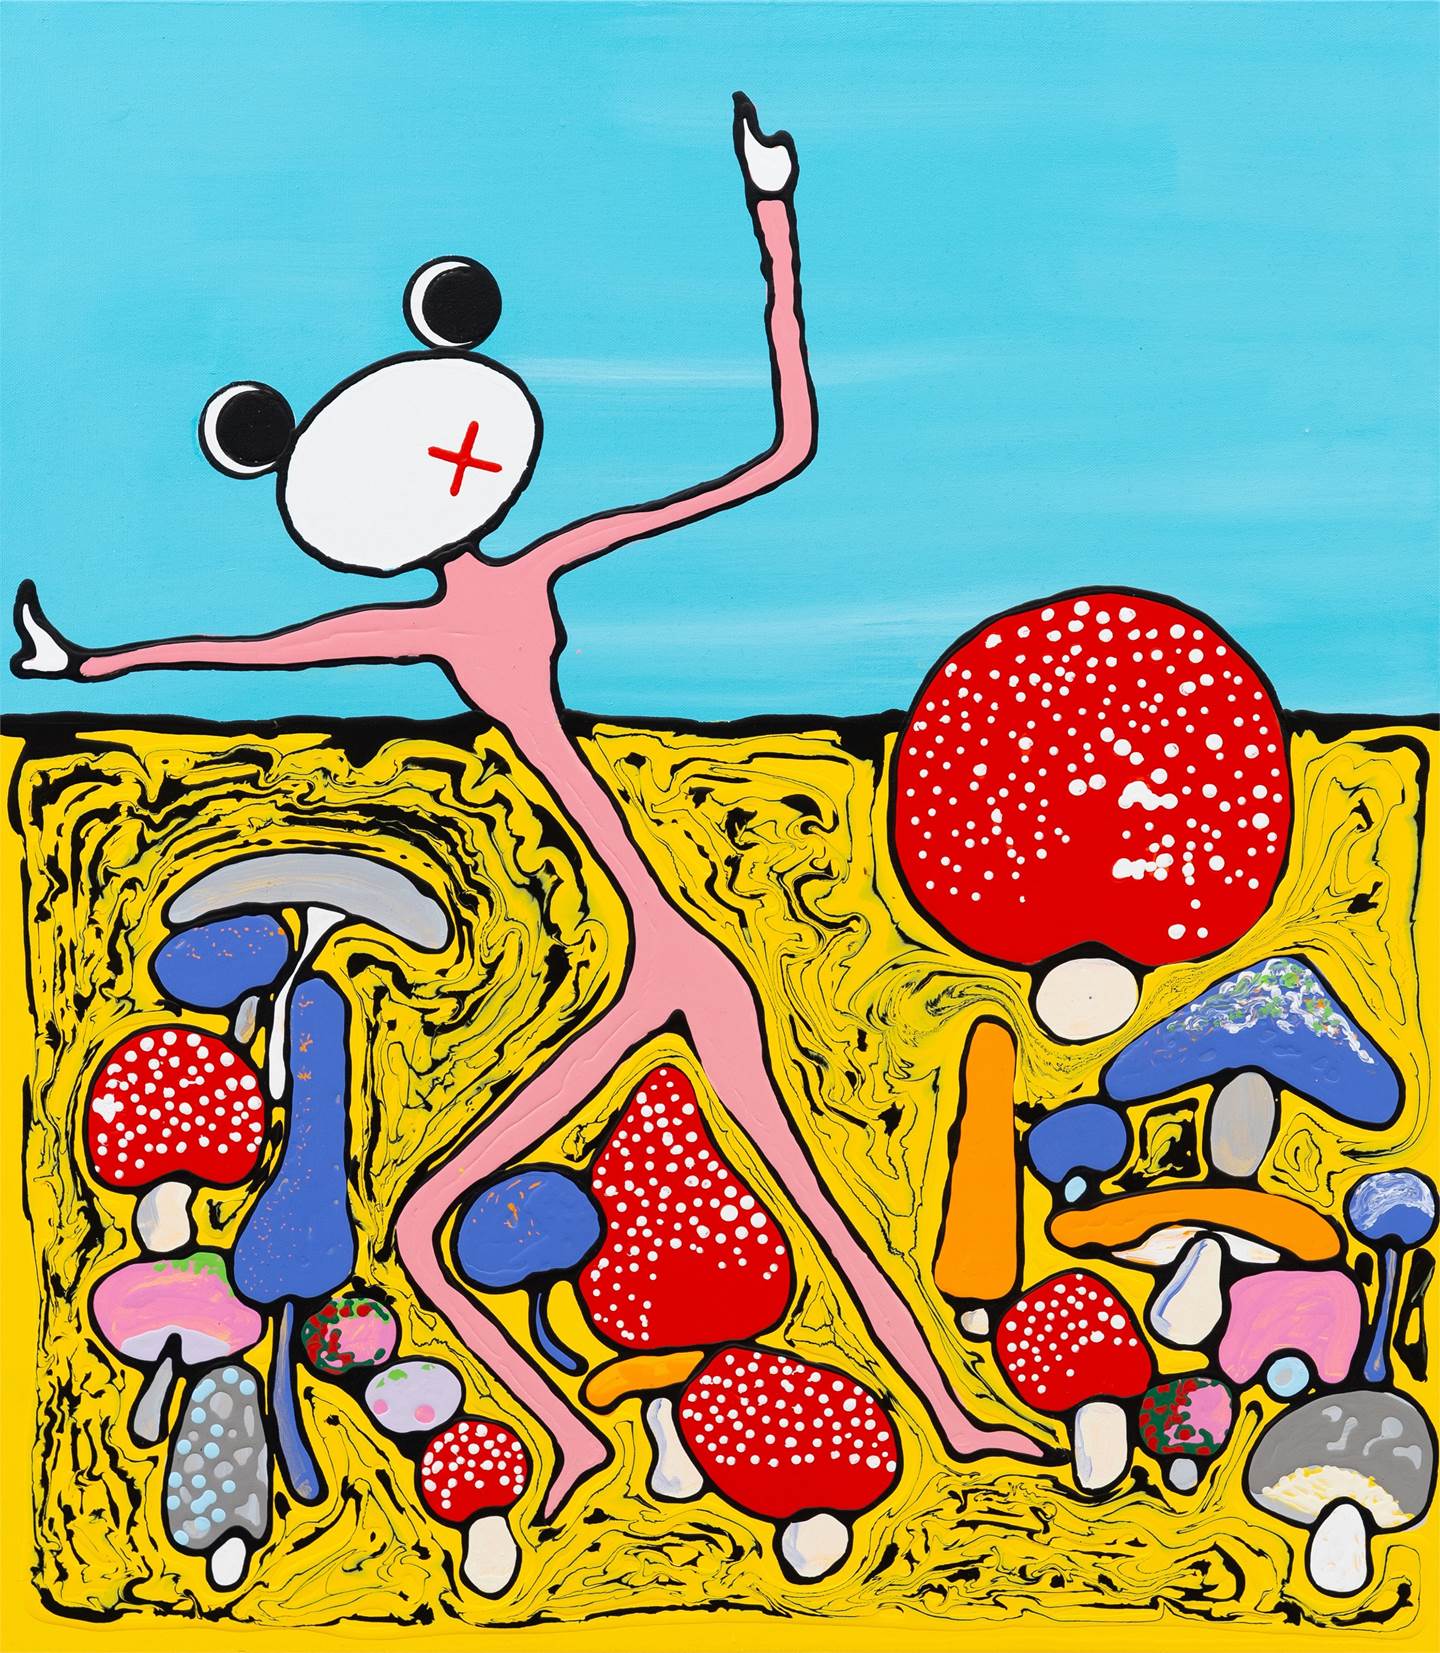 Dance with the mushrooms #1, original   Painting by Mario Louro